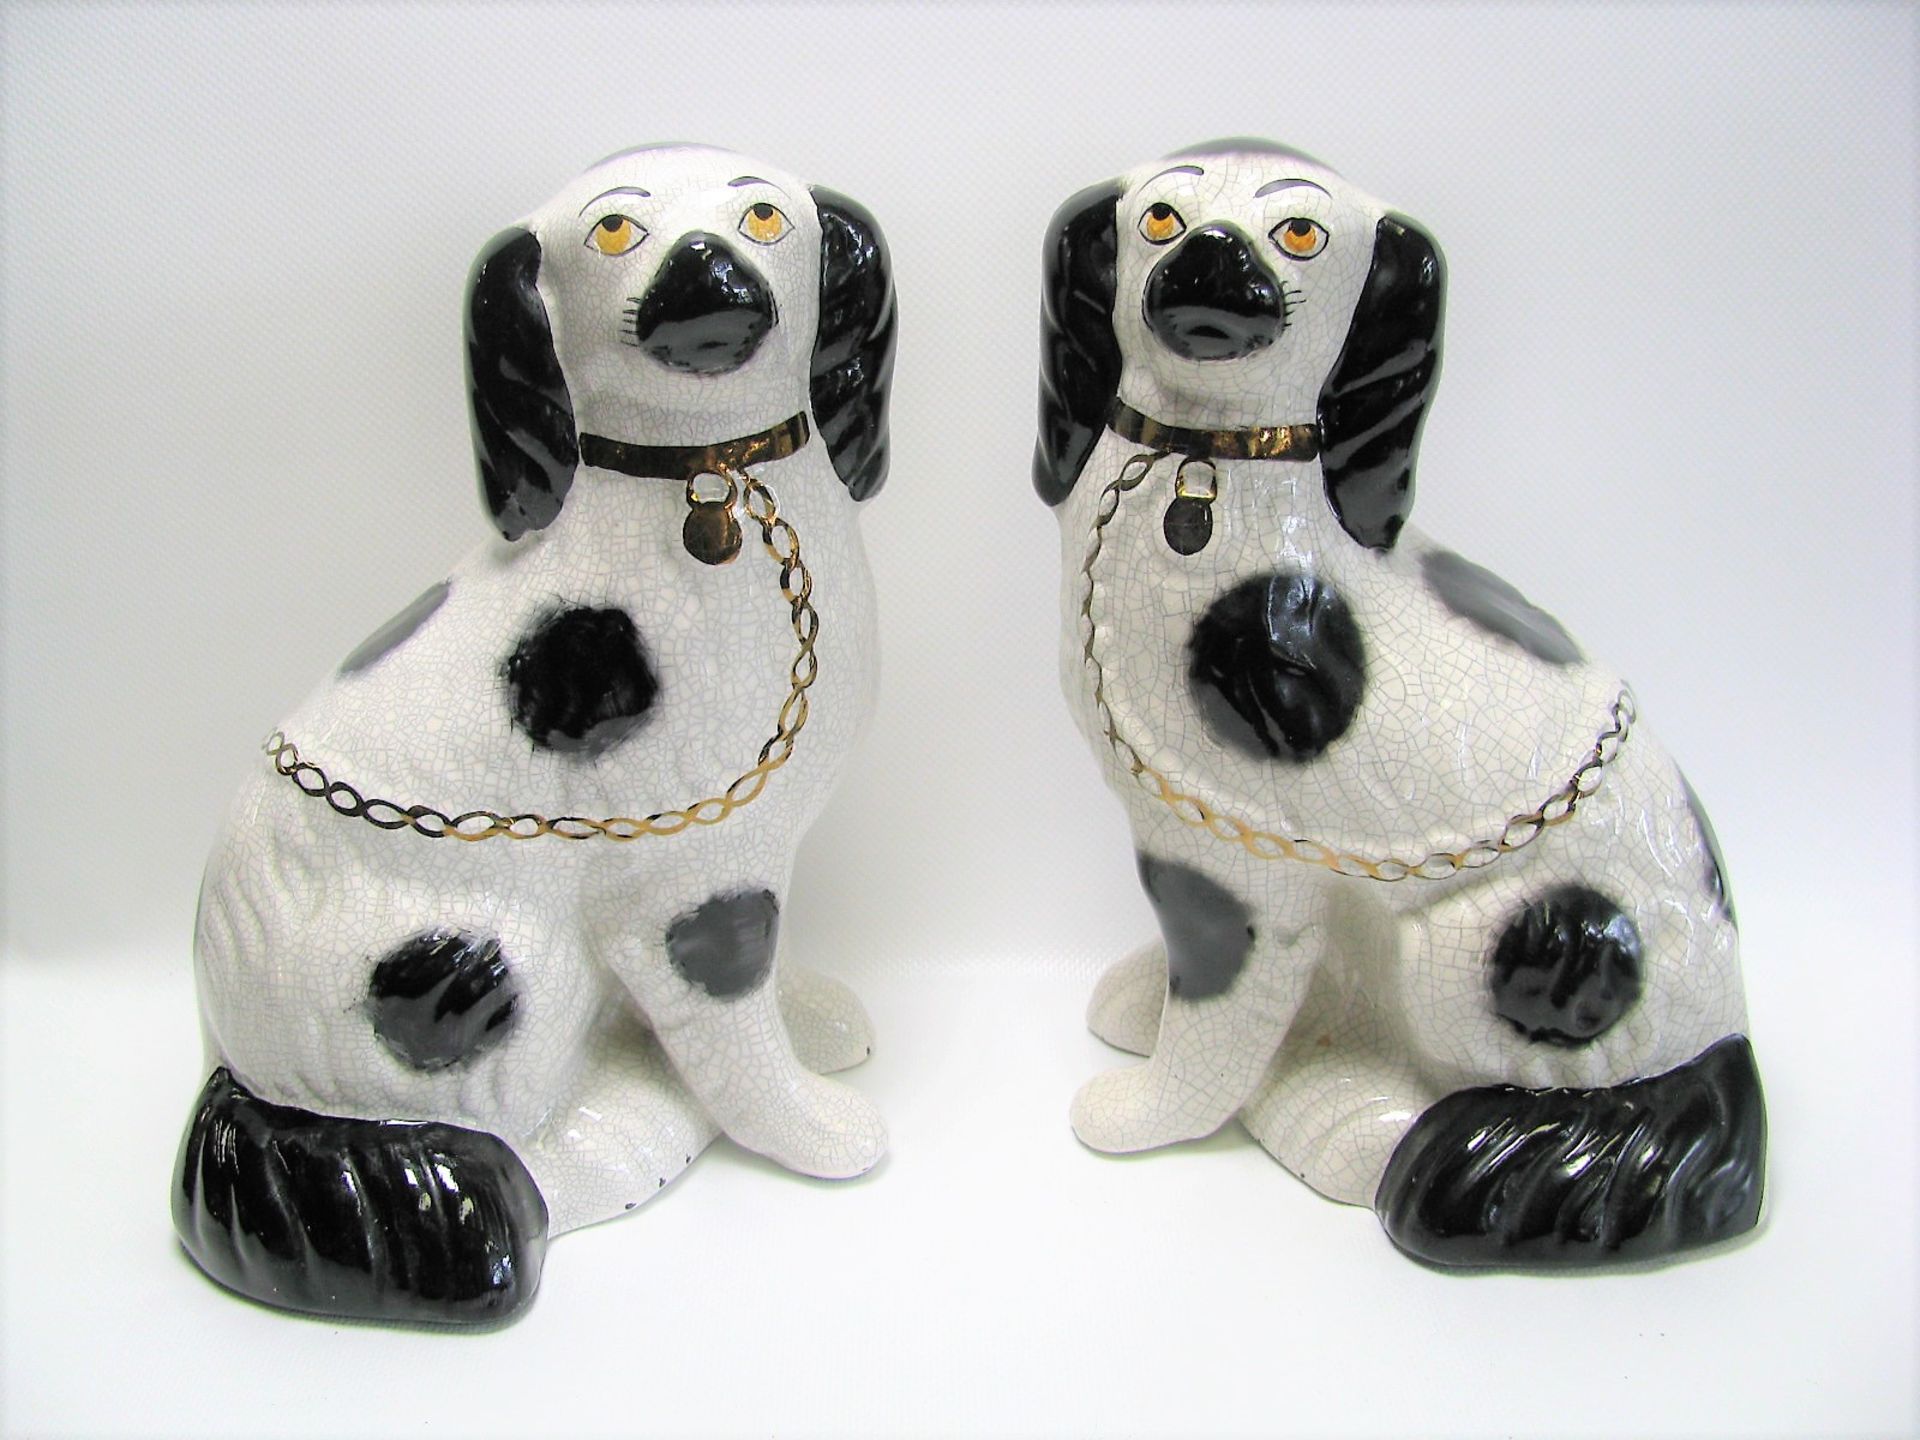 Paar Staffordshire Hunde, sog. "Puffhunde", England, Keramik polychrom glasiert, h 22 cm, d 17 cm.